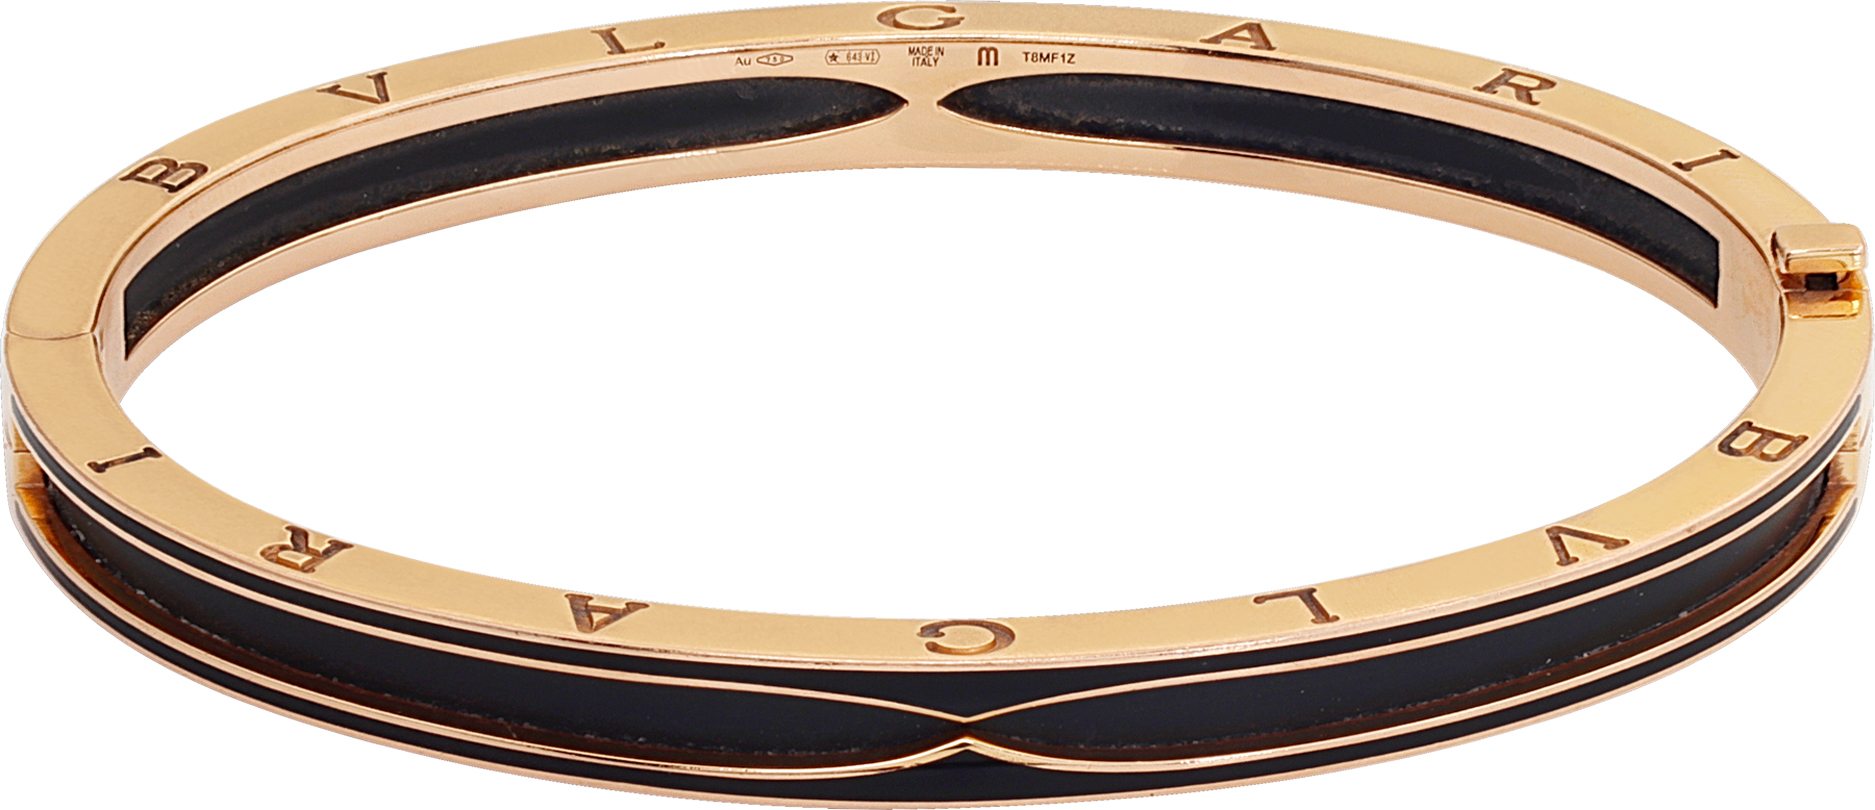 Bvlgari B.zero1 bracelet in 18k rose gold with matte black ceramic